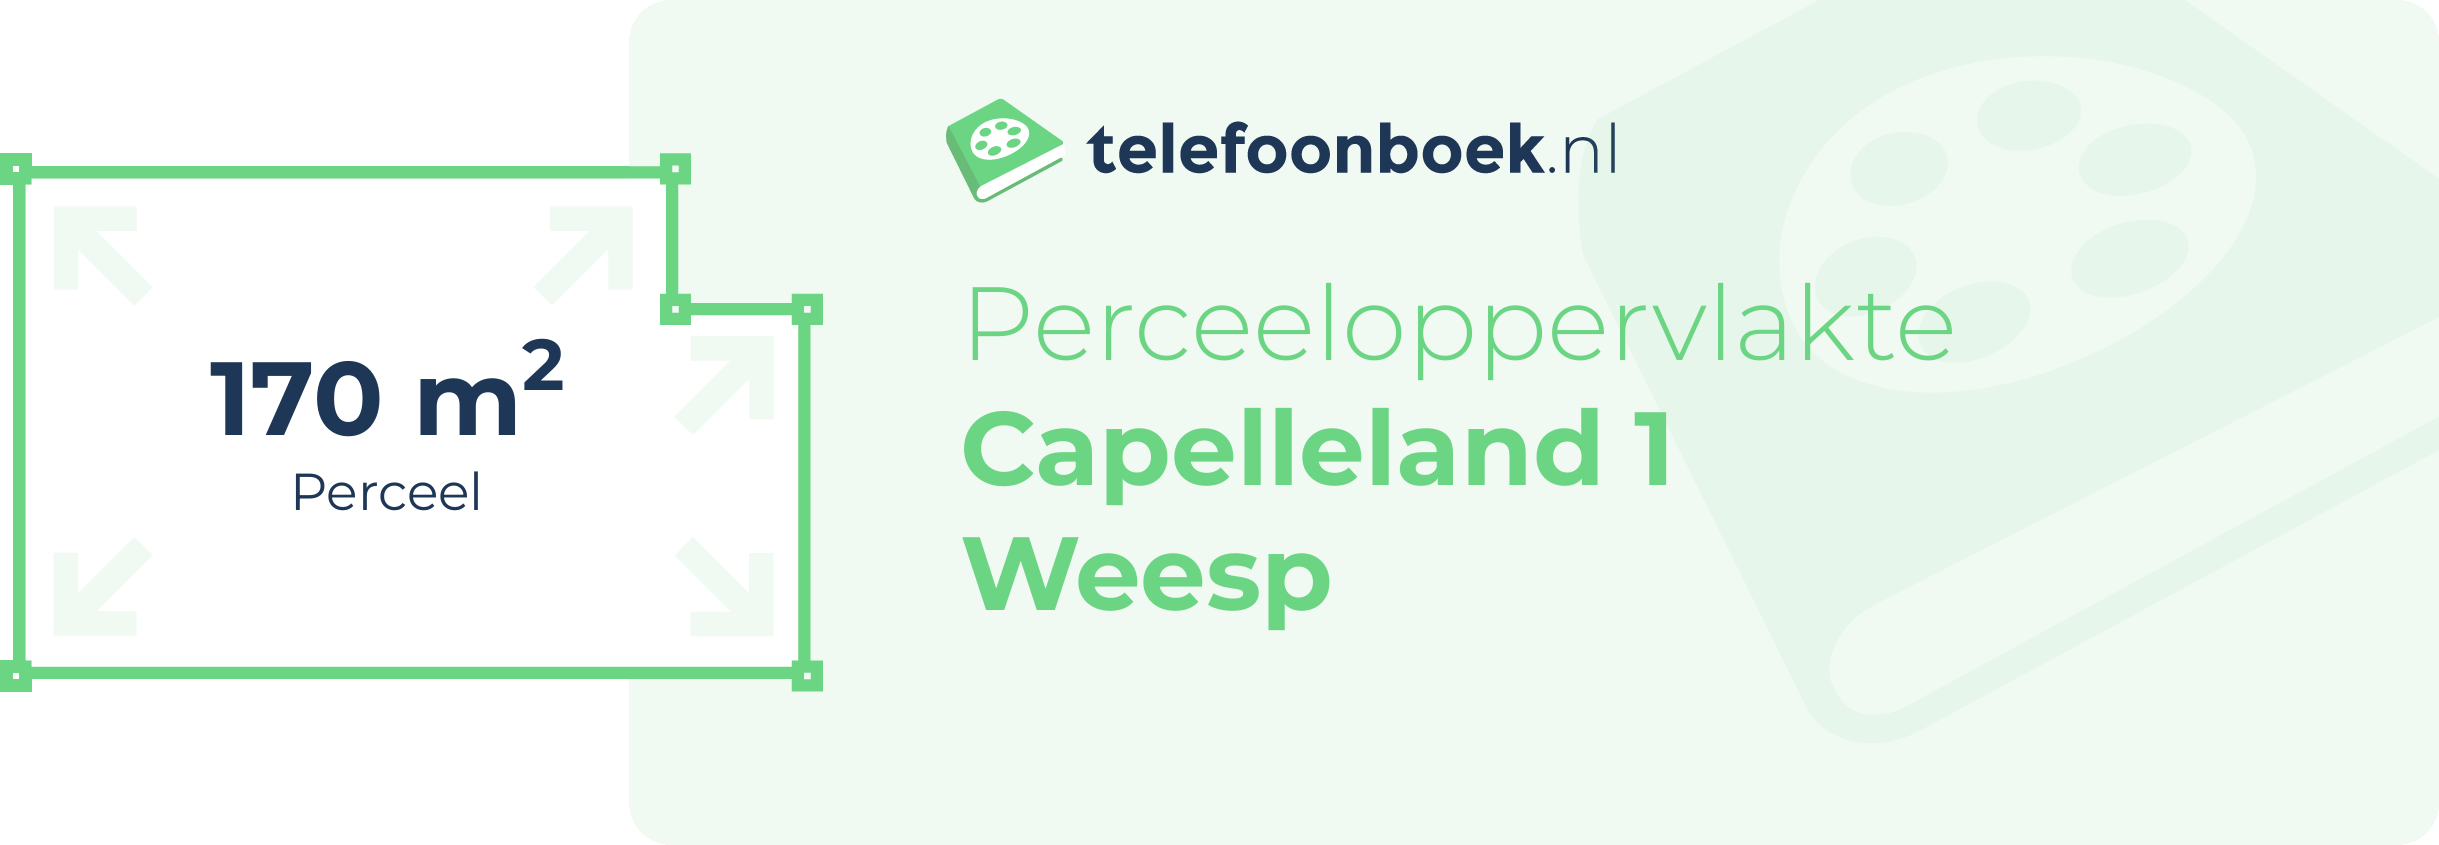 Perceeloppervlakte Capelleland 1 Weesp